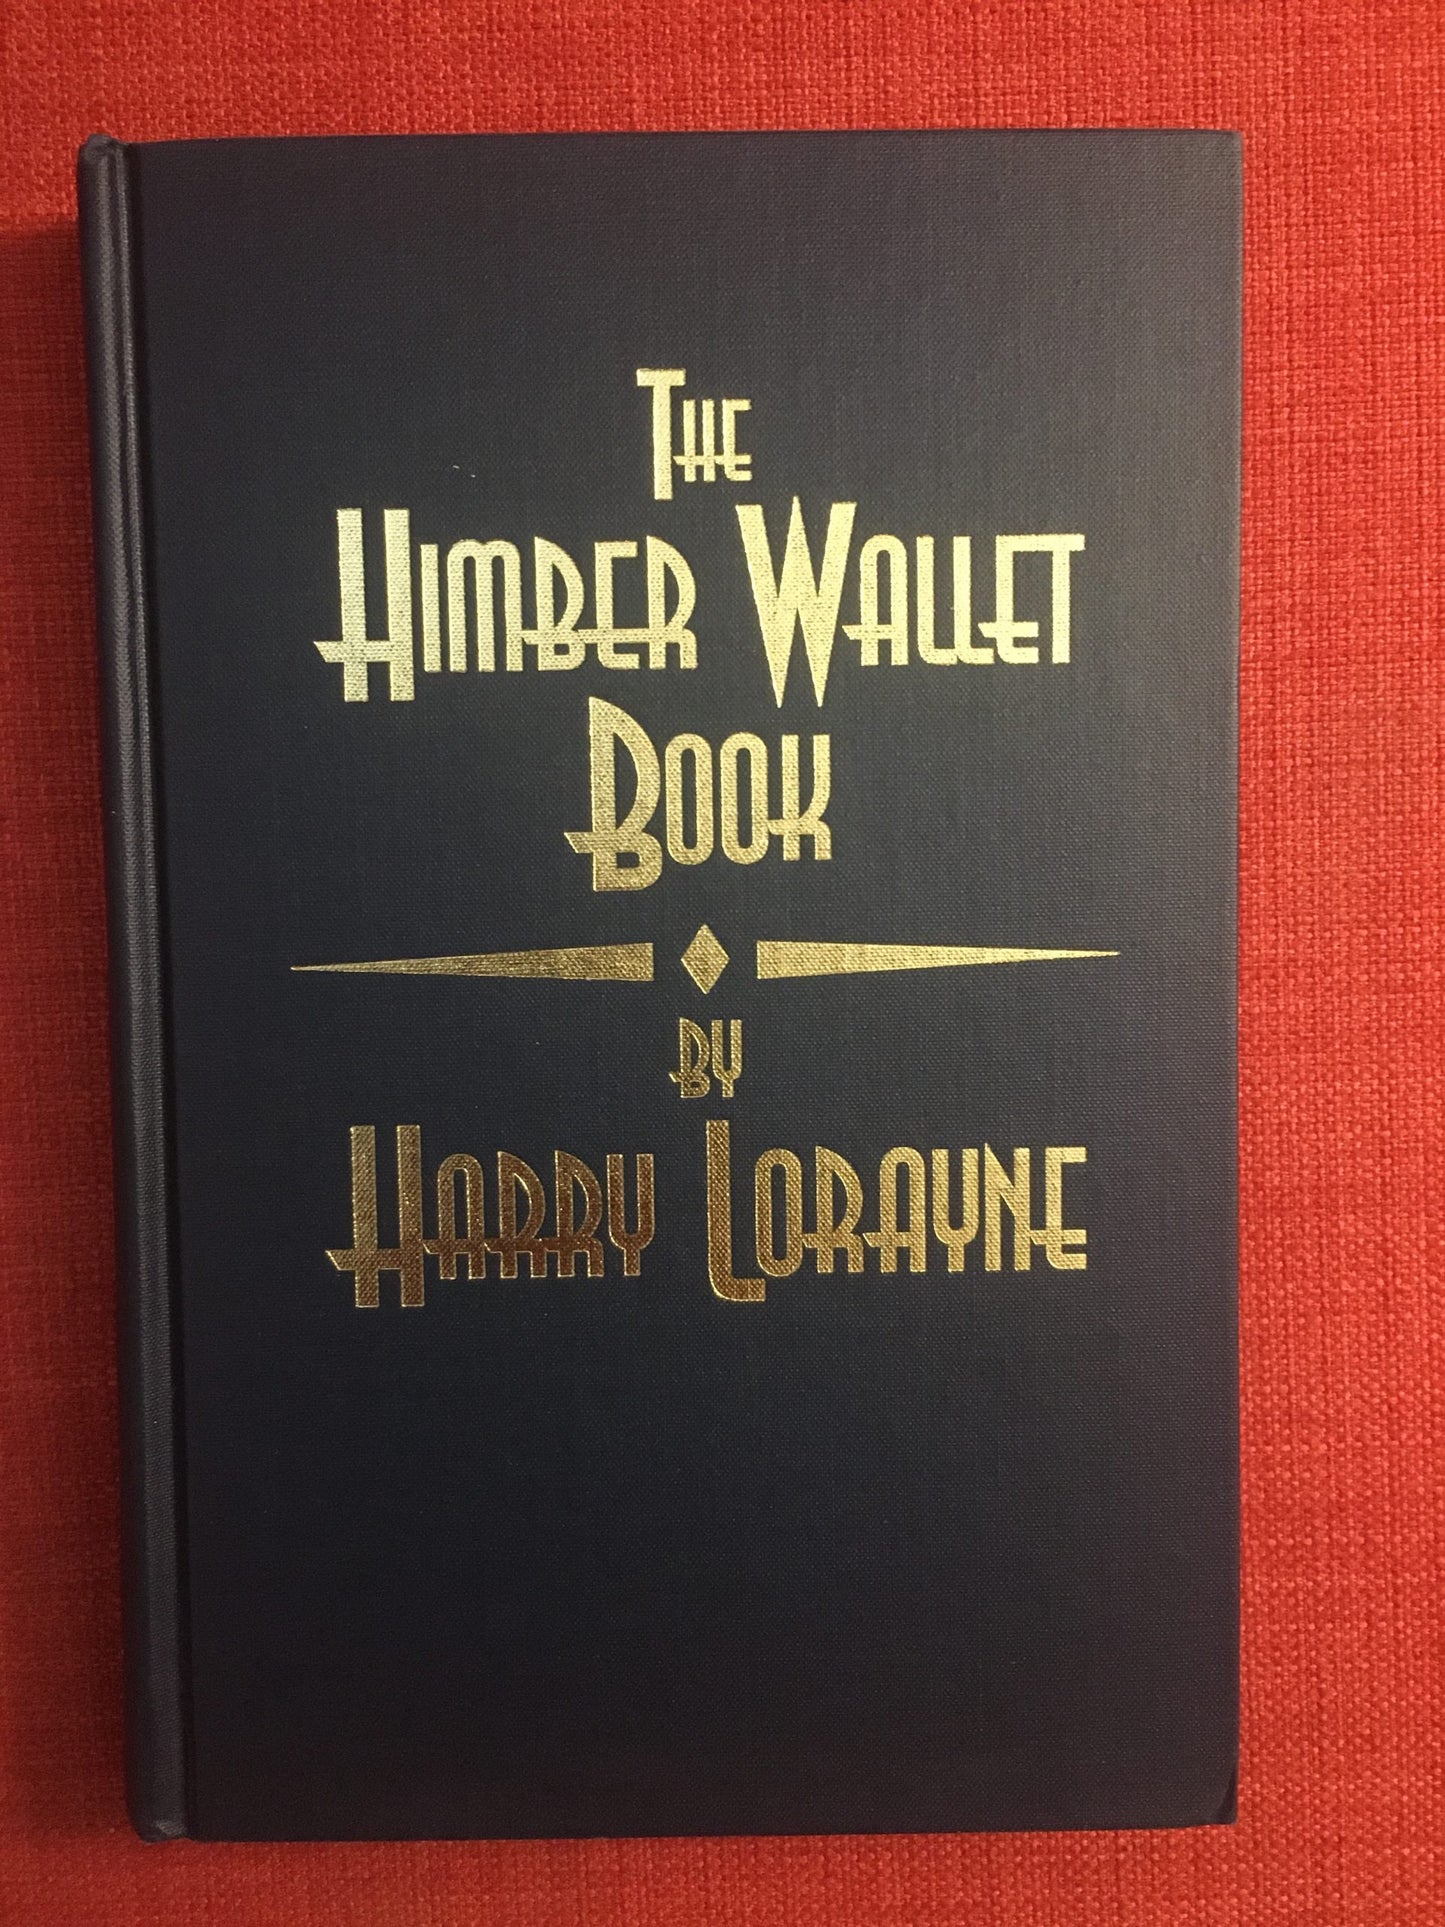 Le livre portefeuille Himber, par Harry Lorayne, utilisé/rare